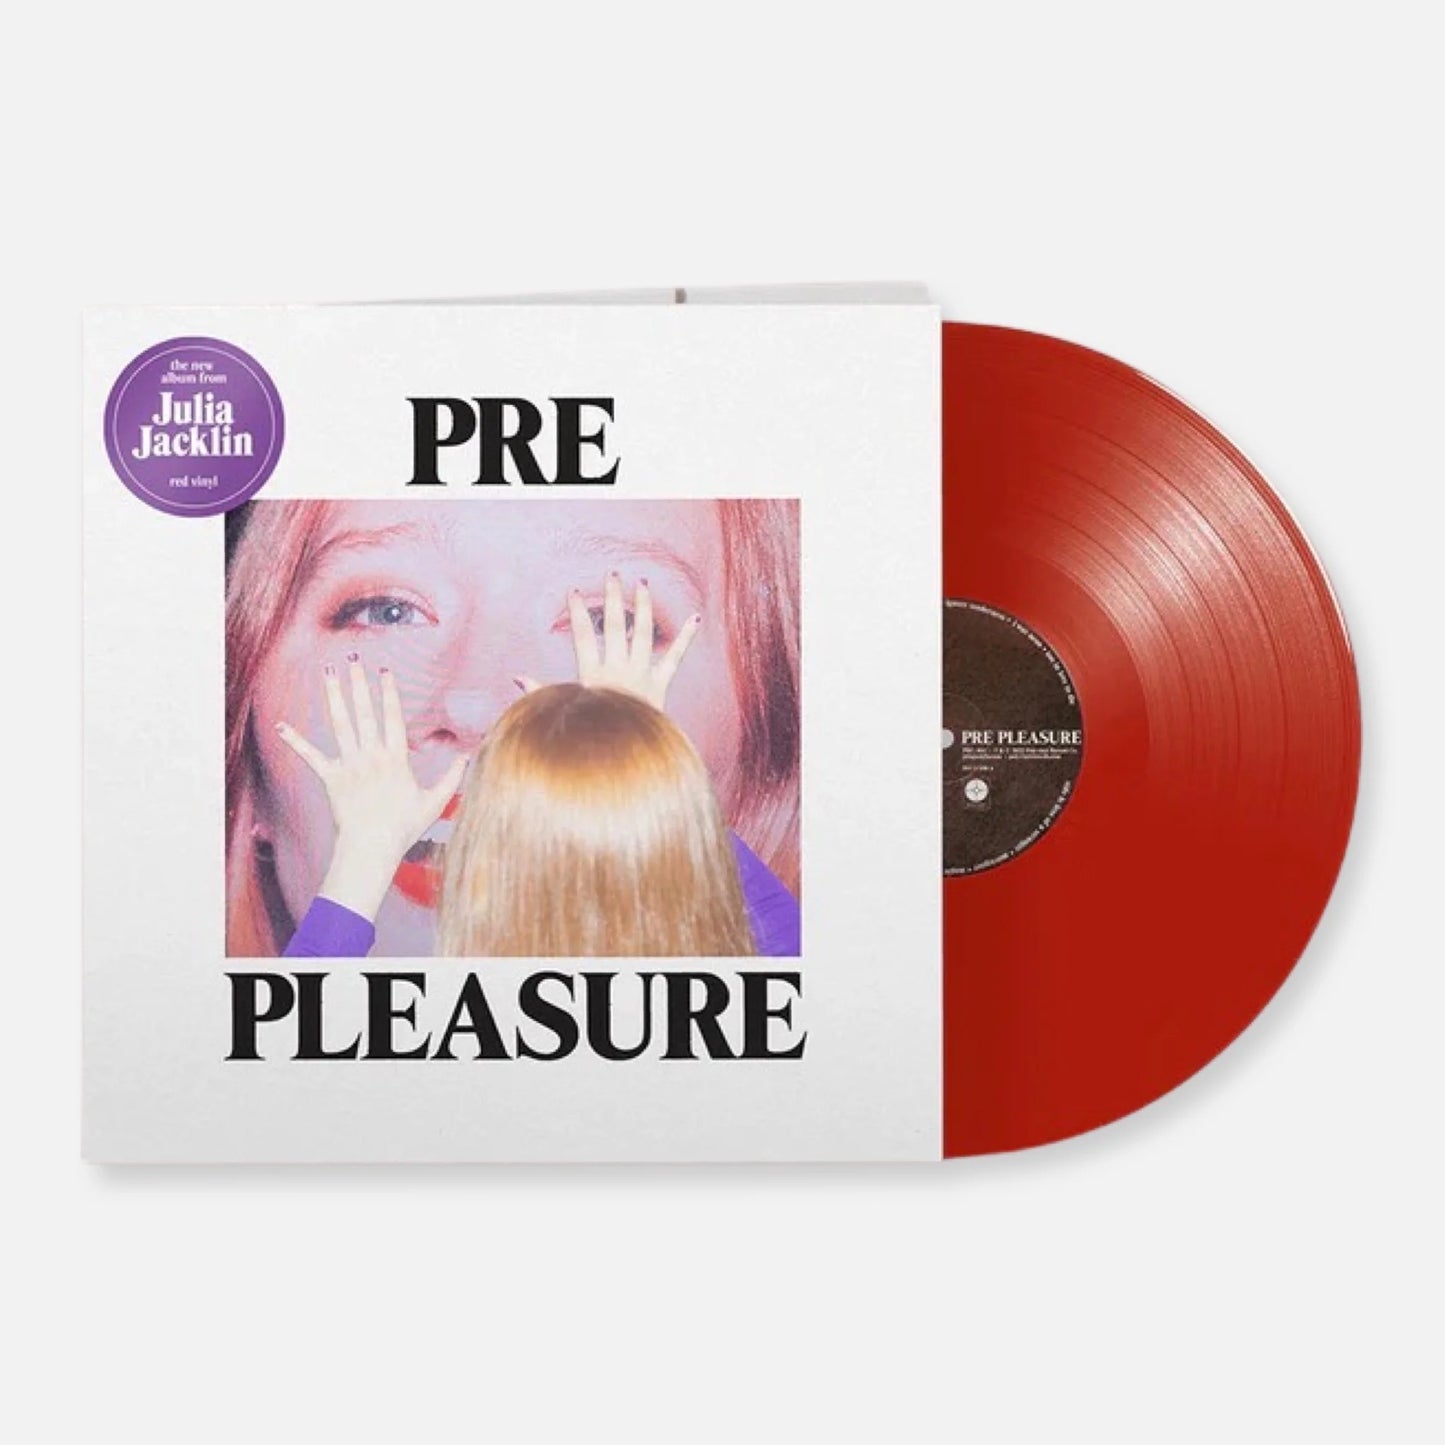 Julia Jacklin - Pre Pleasure (Limited Edition on Red Vinyl)